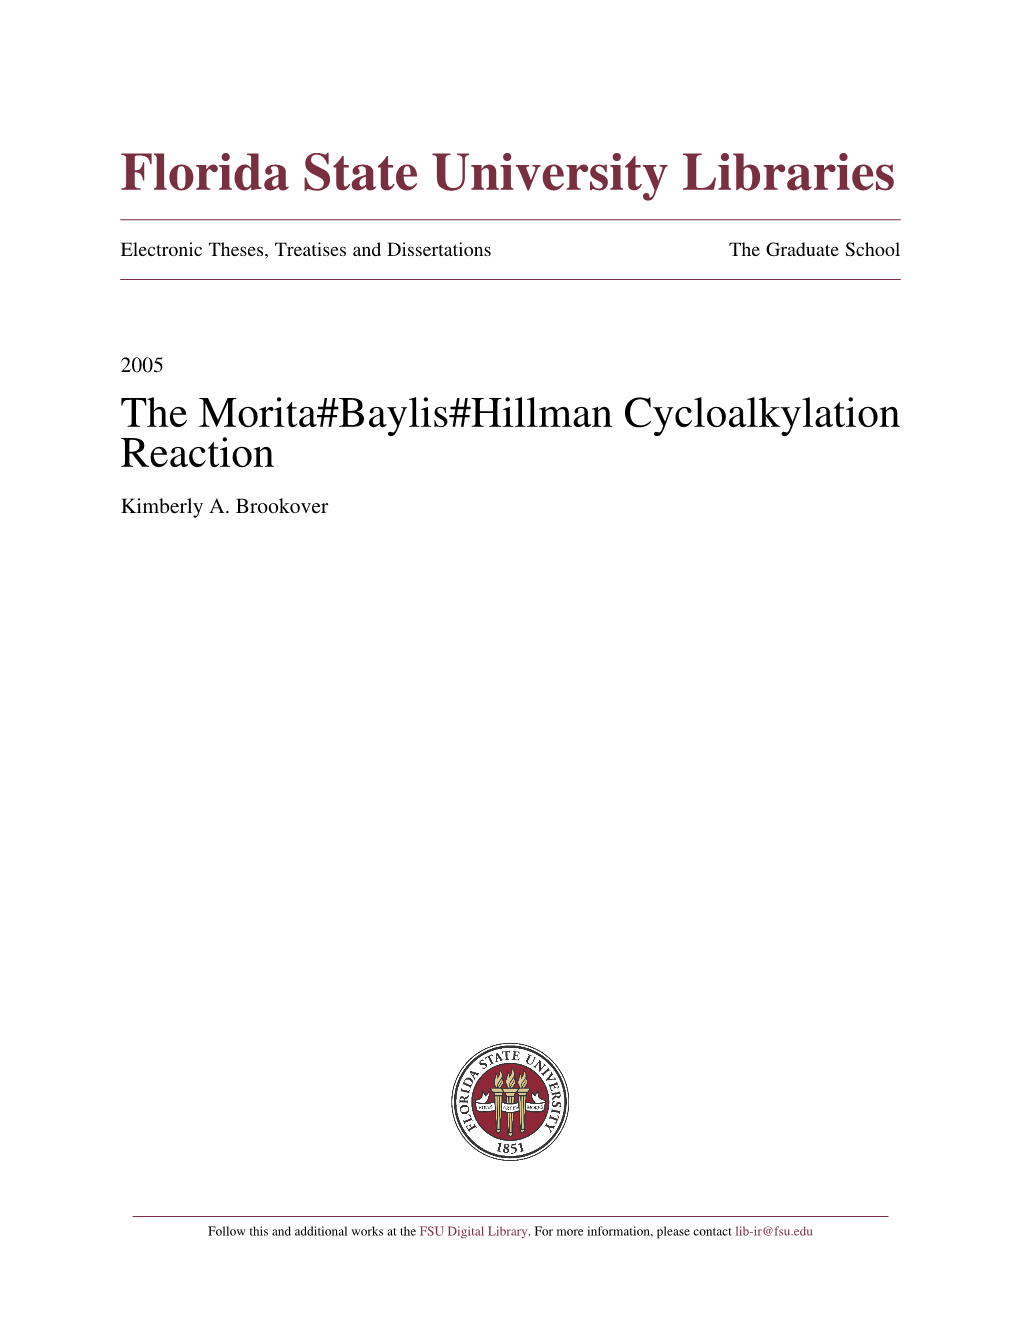 The Morita-Baylis-Hillman Cycloalkylation Reaction